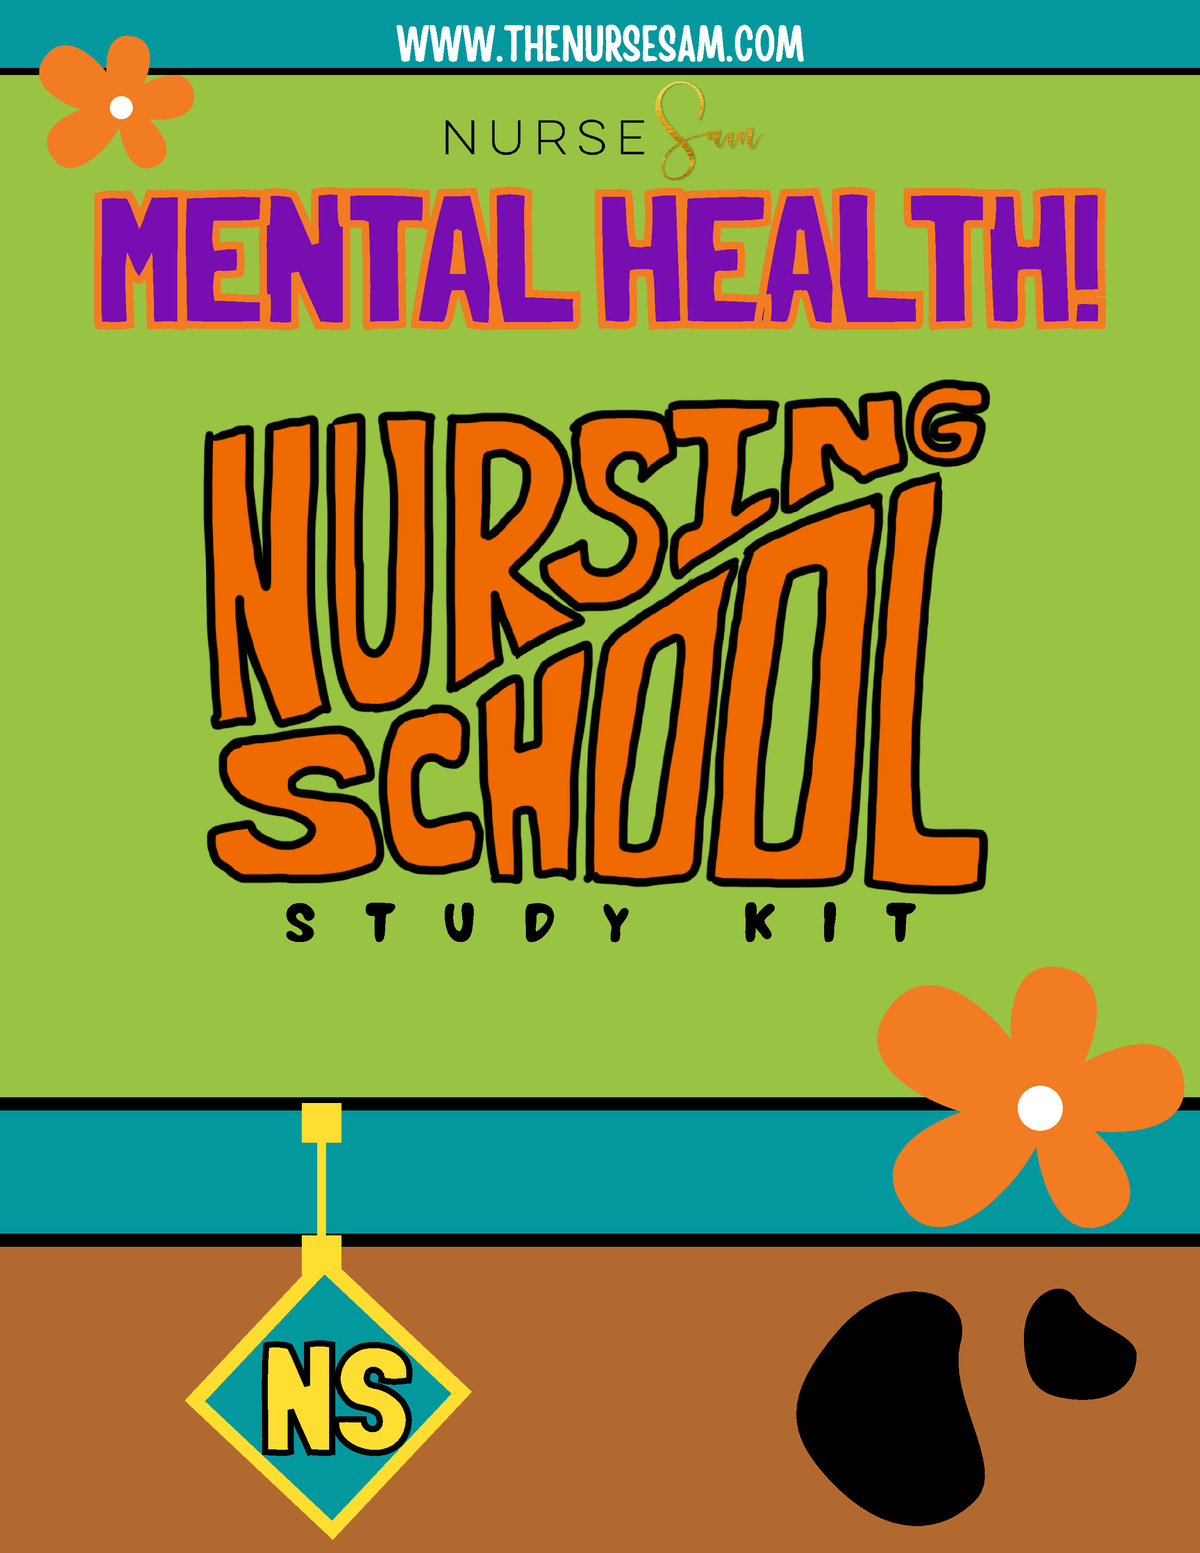 Mental health study kit full MENTAL HEALTH!MENTAL HEALTH!MENTAL